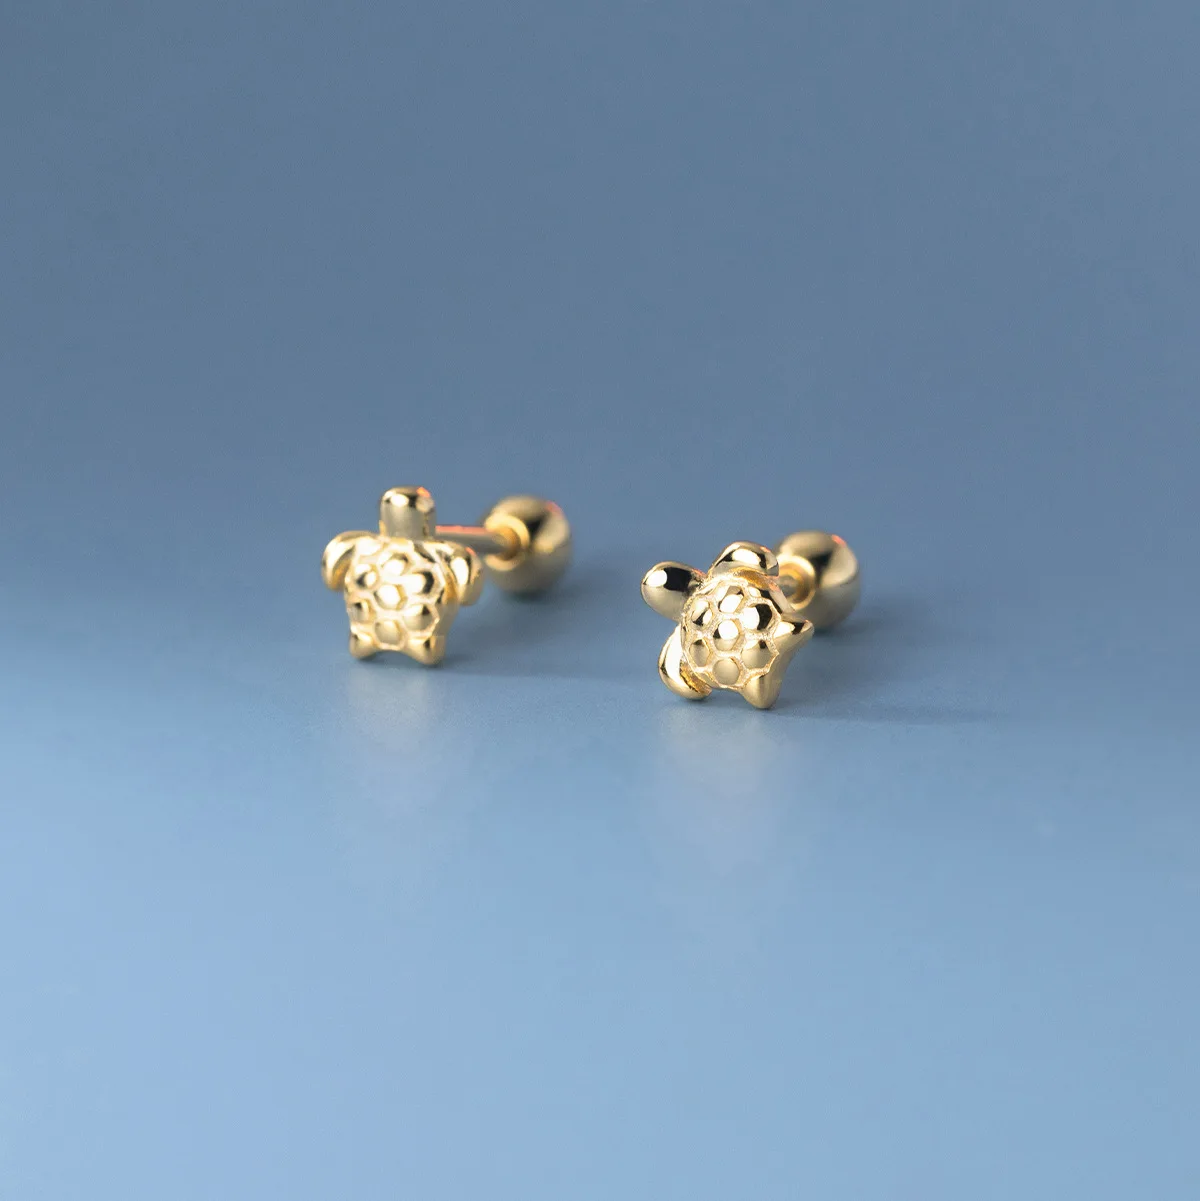 

fashion minimalist jewelry 925 sterling silver small earrings simple marine animal sea turtle gold plated stud earrings women